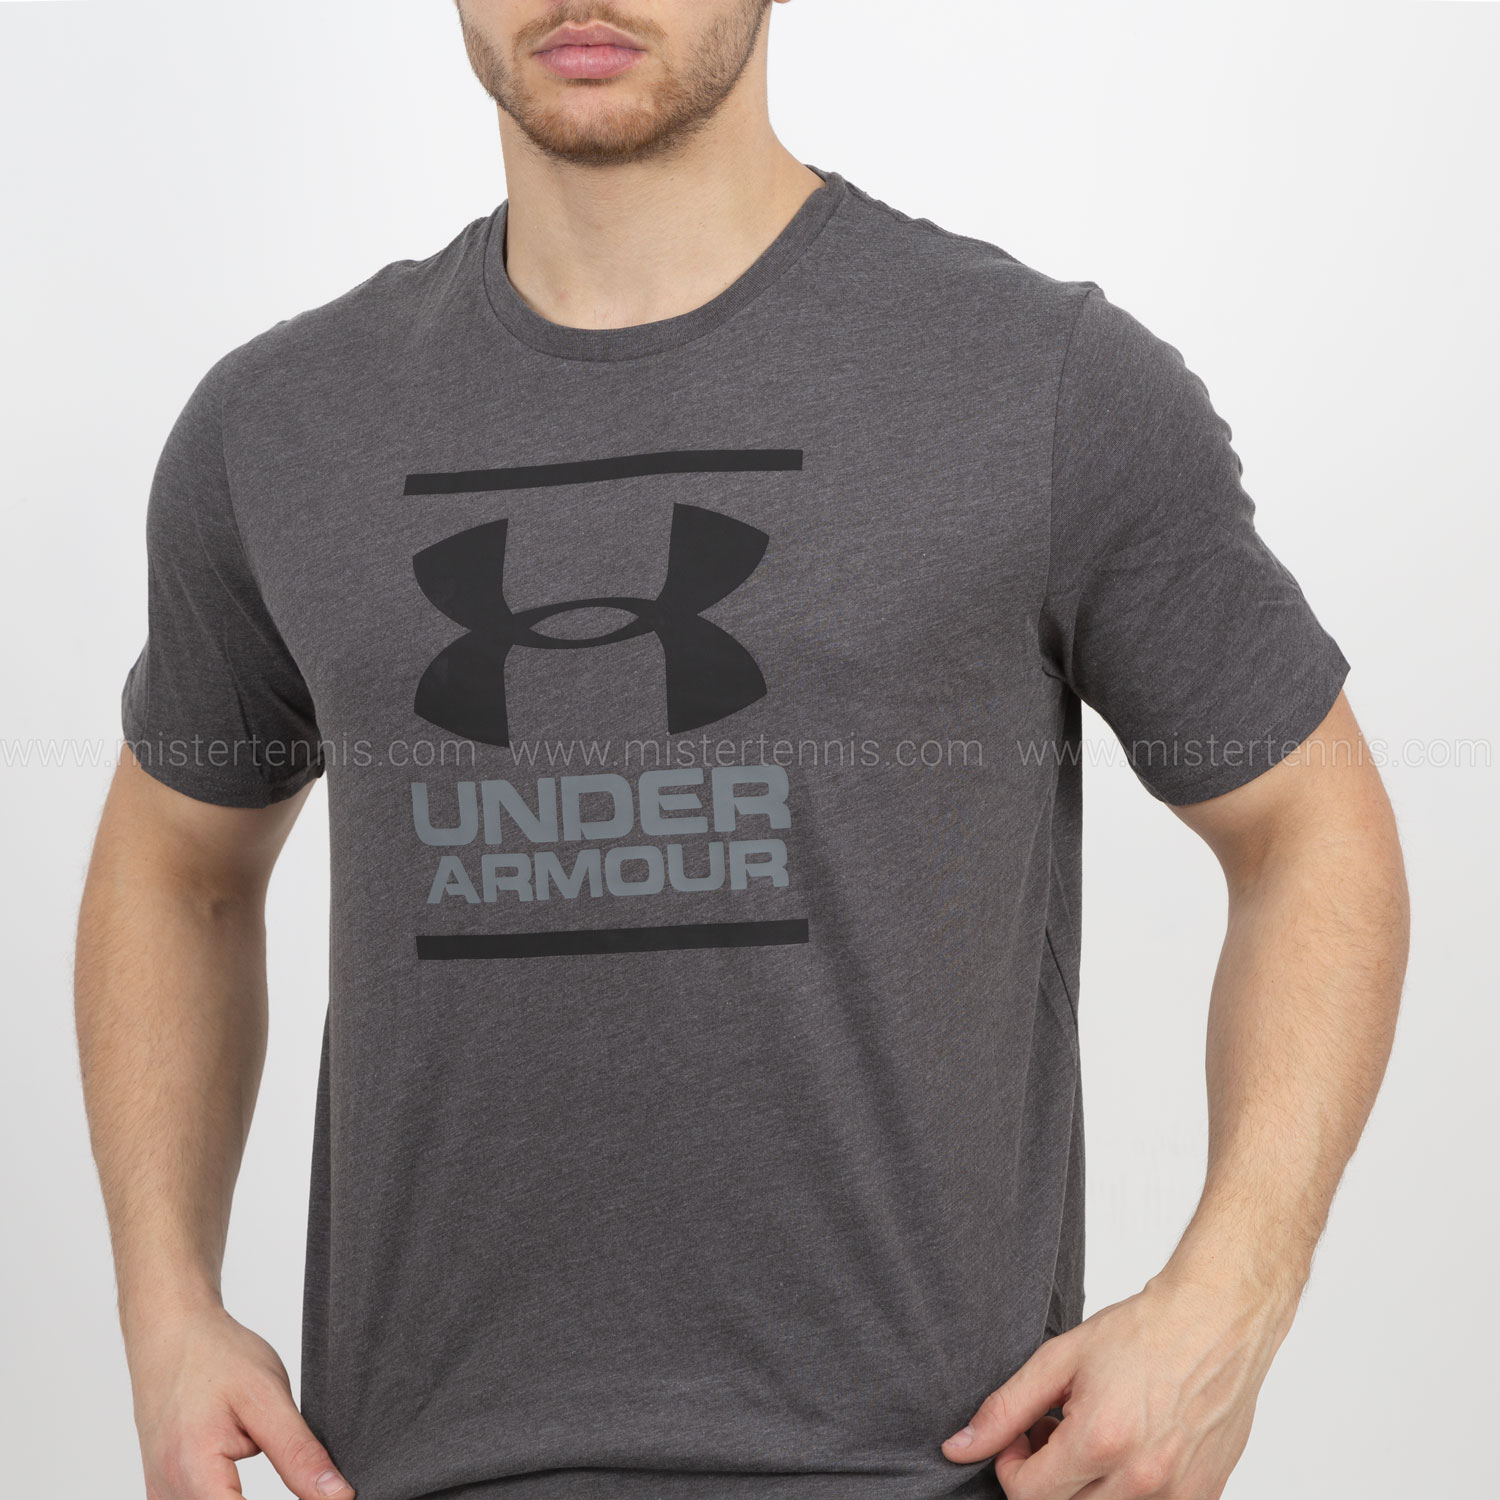 Under Armour Foundation T-Shirt - Dark Grey/Black